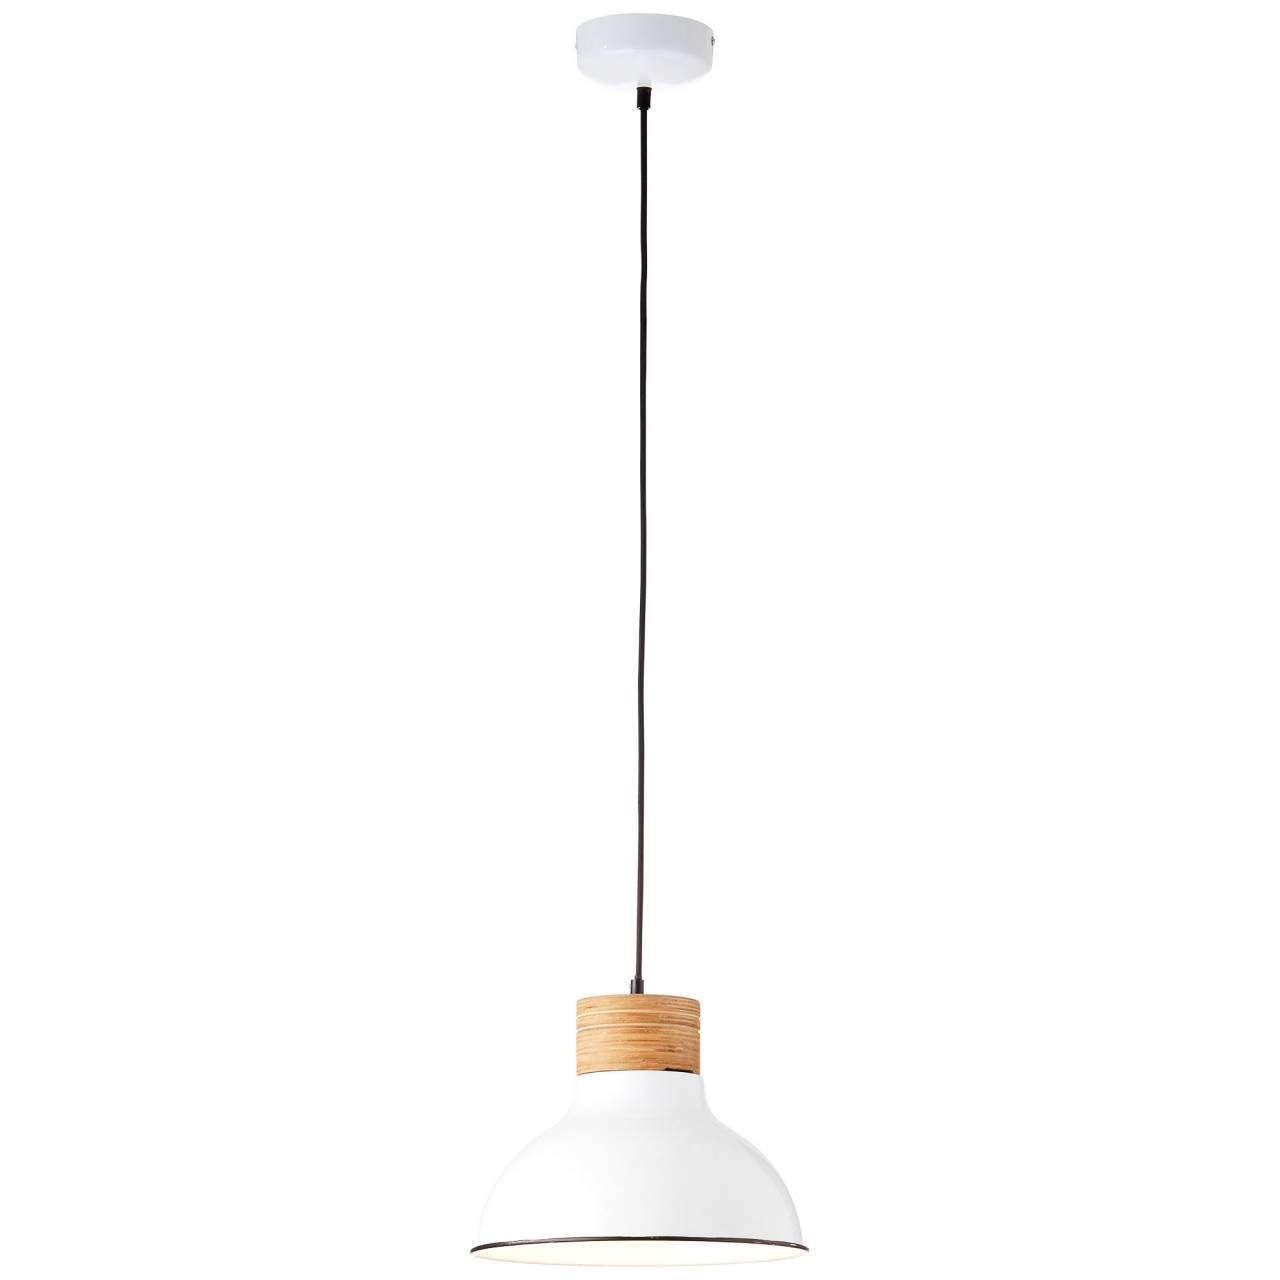 Brilliant Pendelleuchte Pullet, Lampe Pullet E27, gee weiß/holz 30cm hell Pendelleuchte 1x A60, 40W